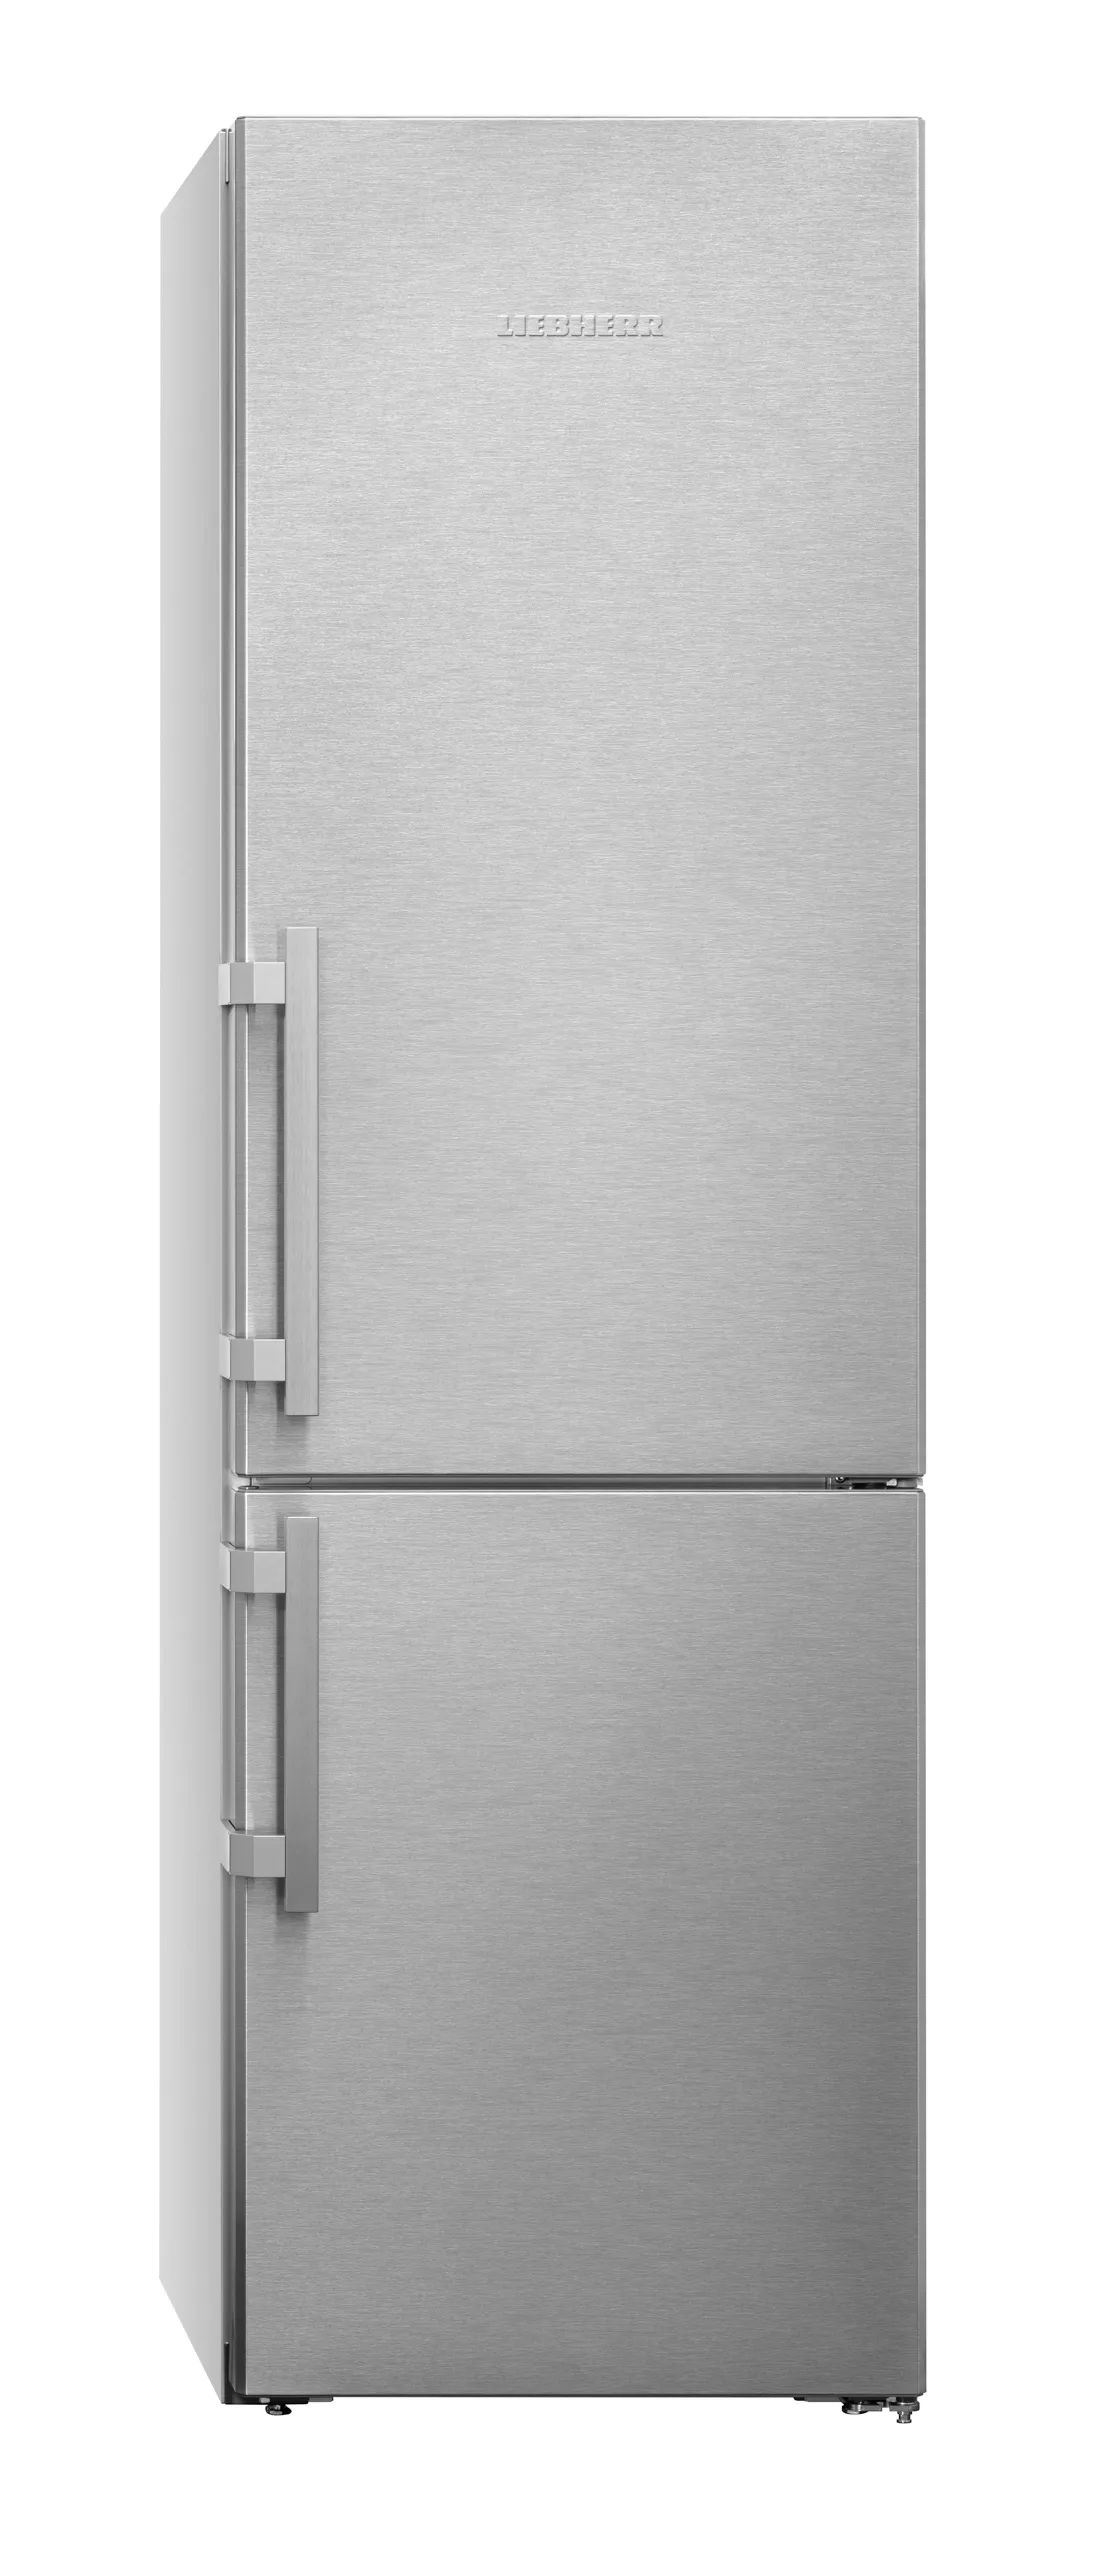 NoFrost combined refrigerator 60 cm CNsdd 5763 Liebherr